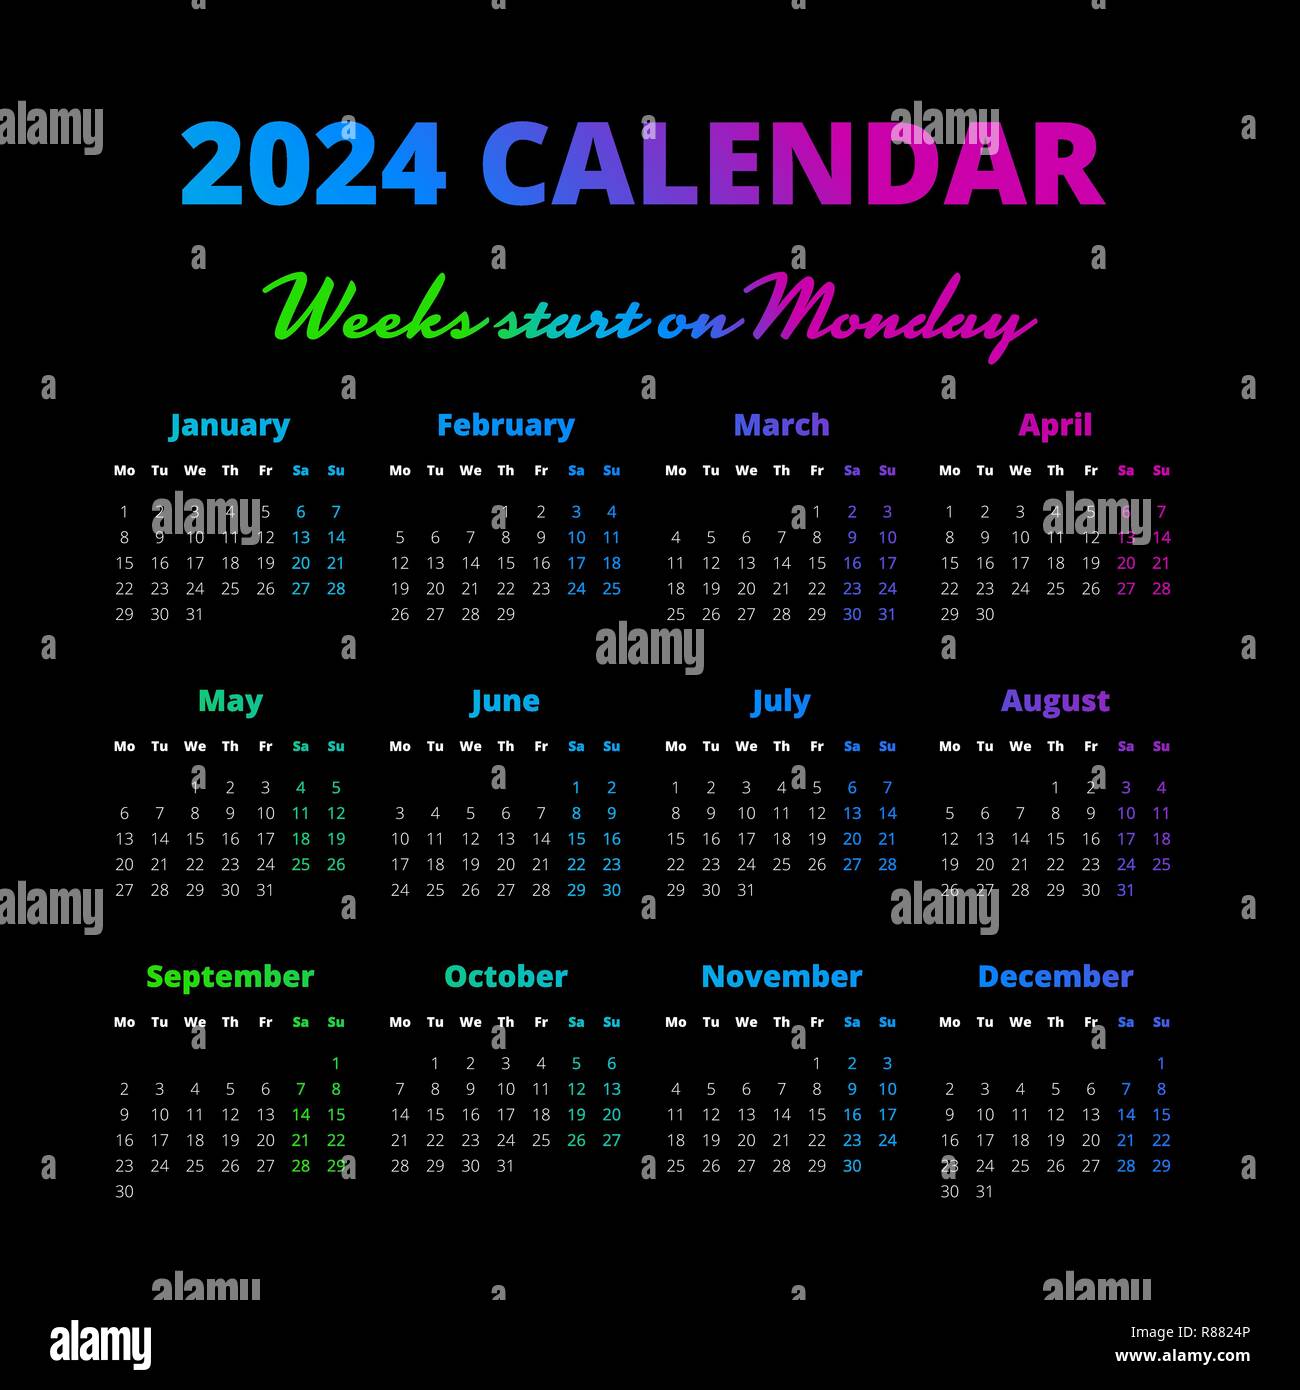 May 2024 Calendar Wallpaper Easy to Use Calendar App 2024